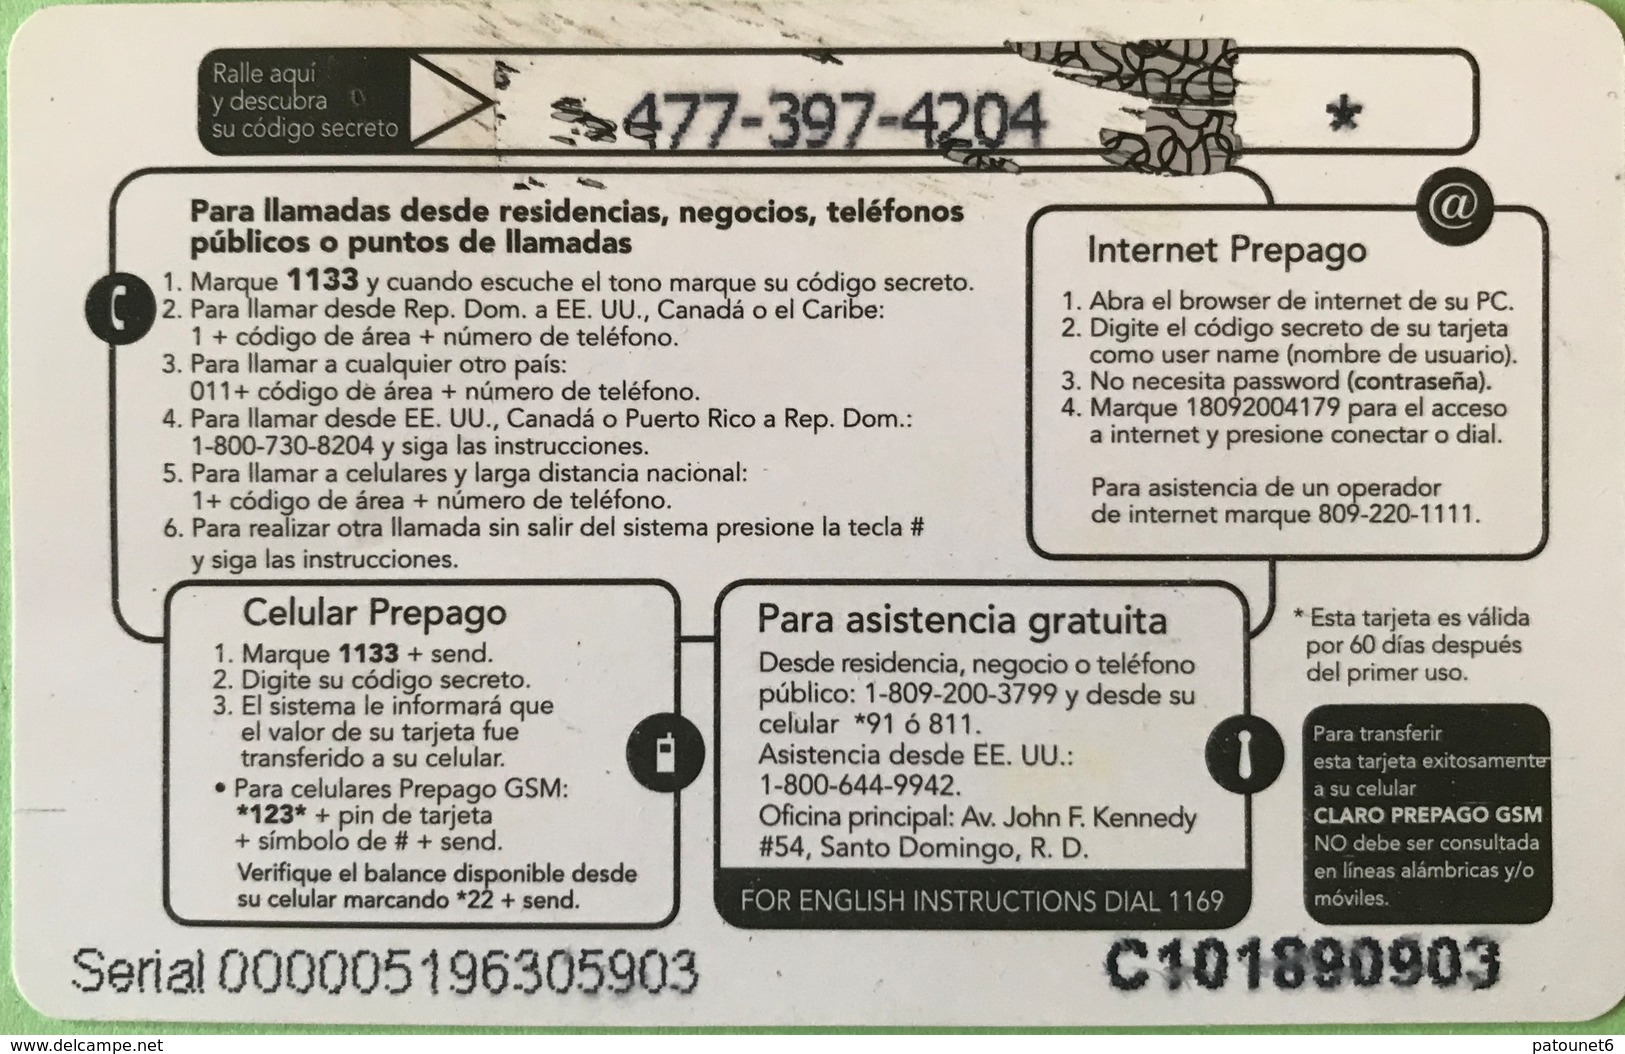 DOMINICAINE  -  Prepaid  - ComuniCard - Codetel  - $50 - Dominicaine